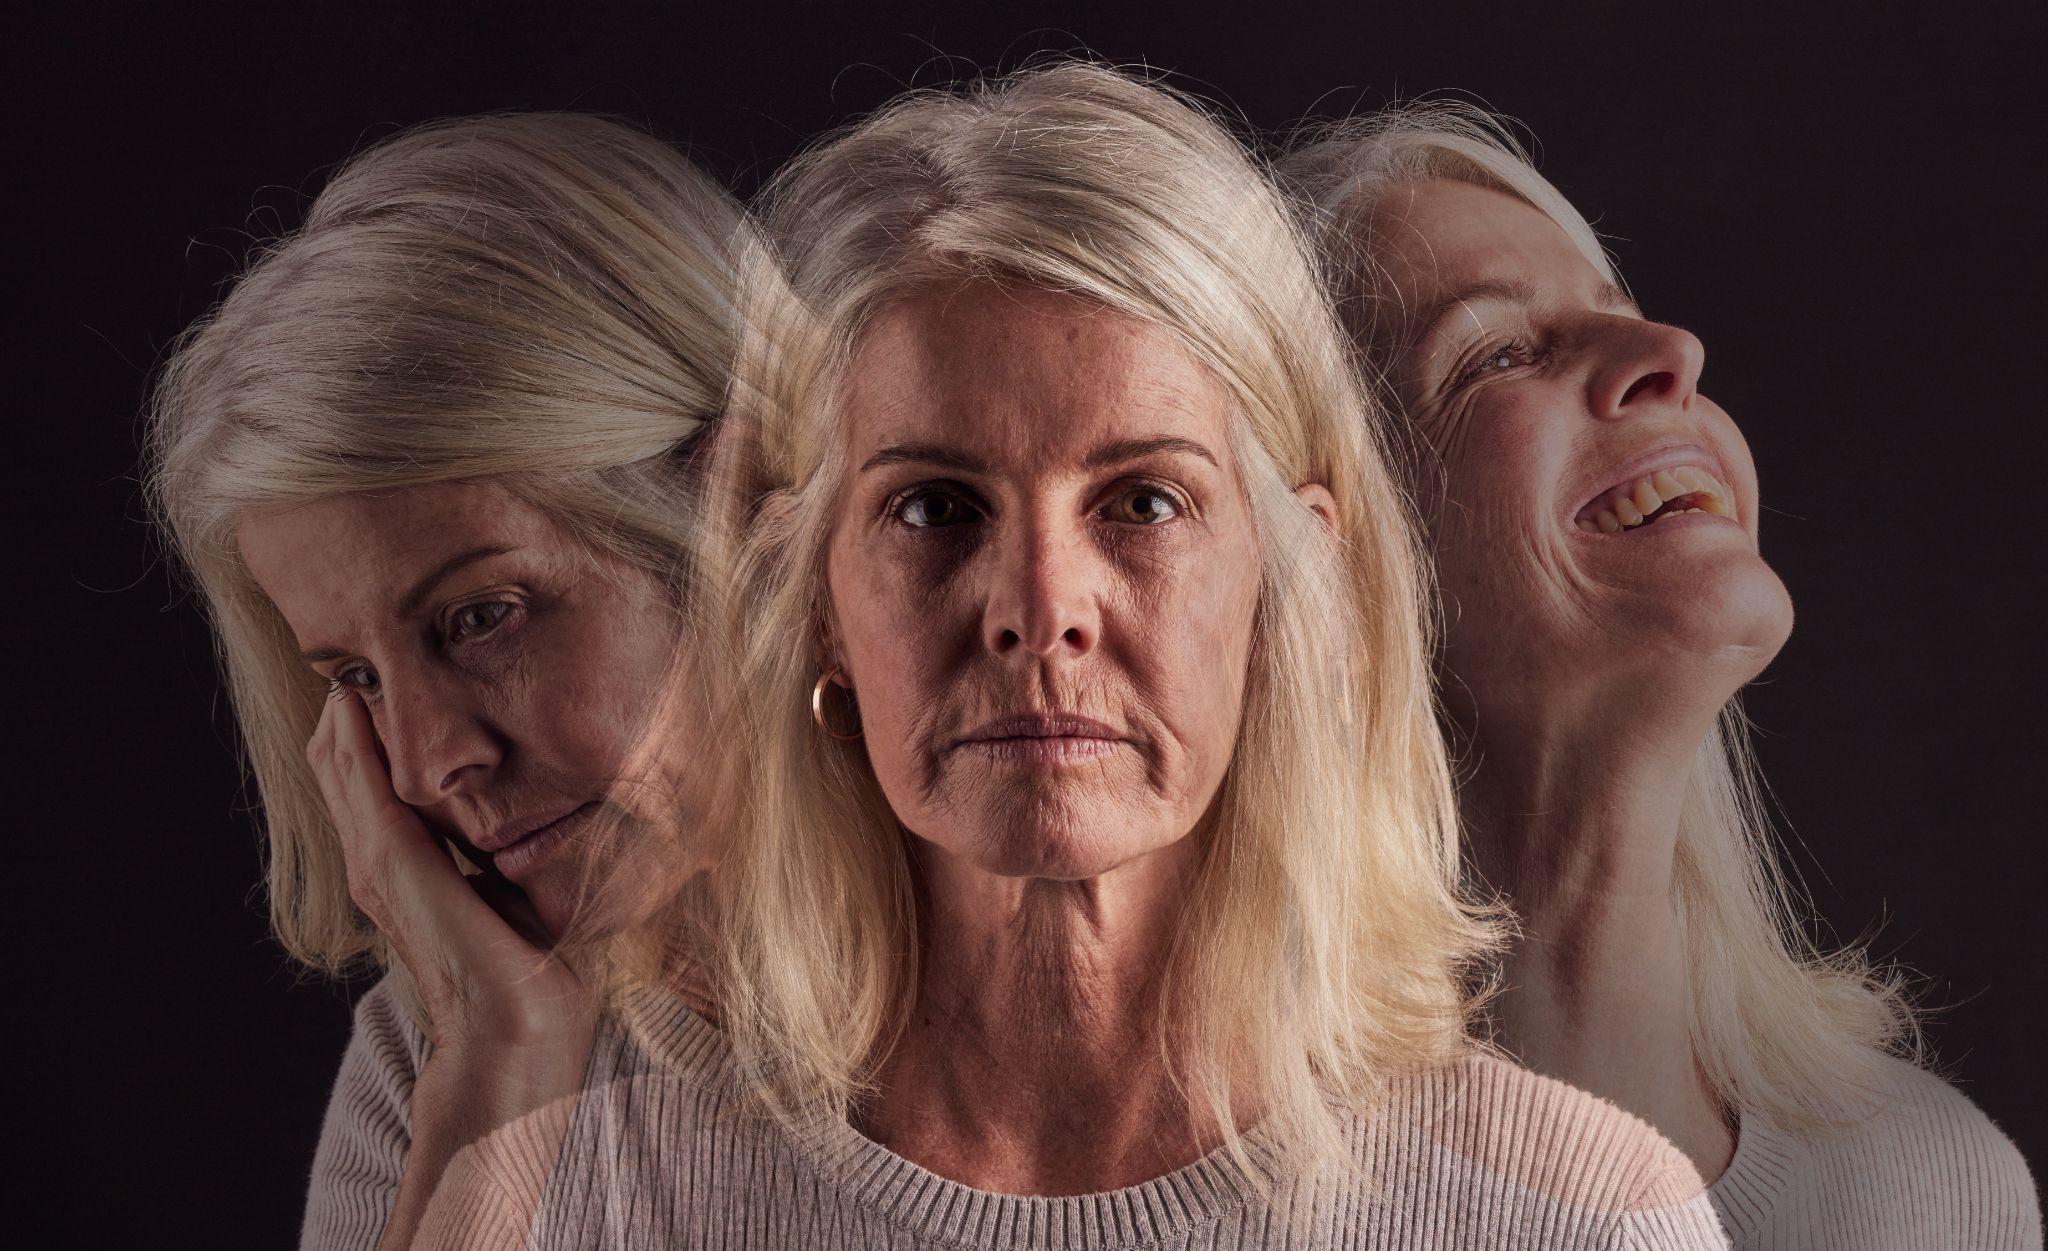 Senior woman, bipolar or mental health for depression, psychology or mood swings